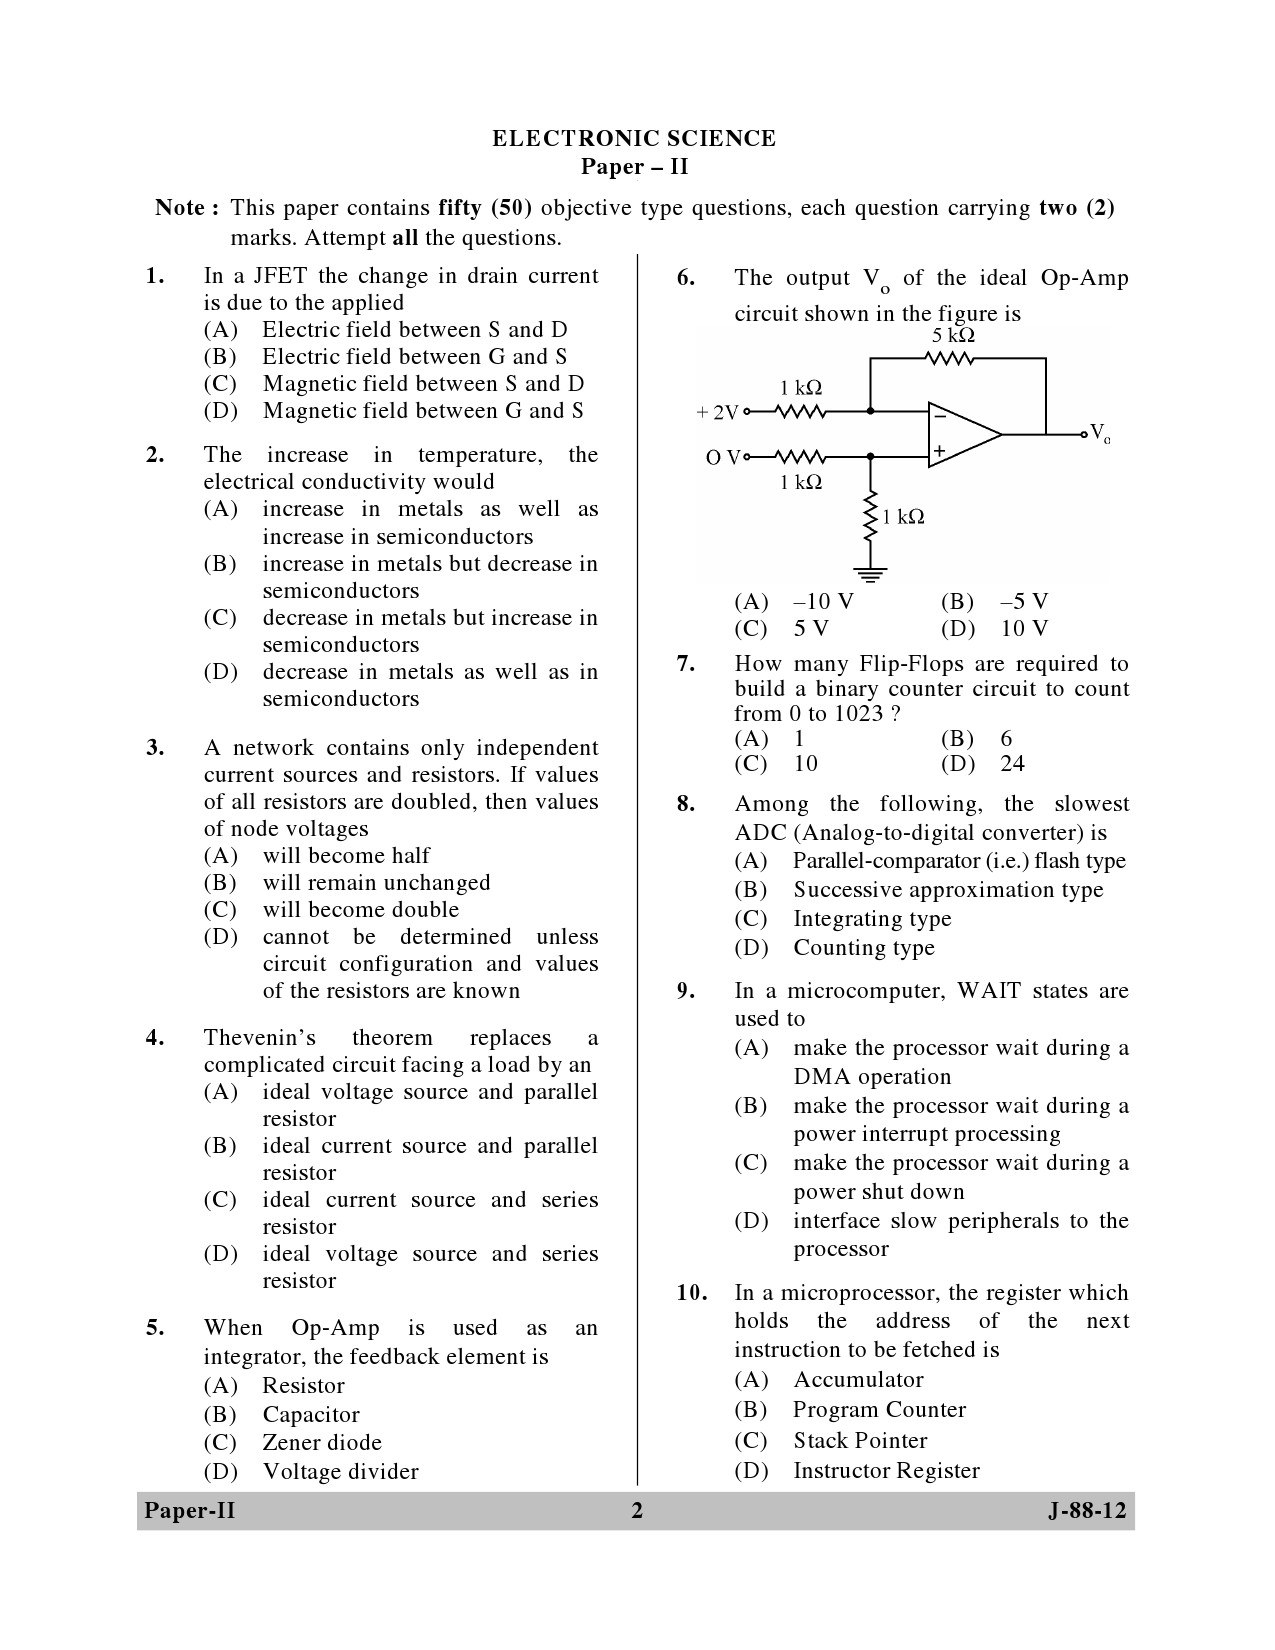 UGC NET Electronic Science Question Paper II June 2012 2